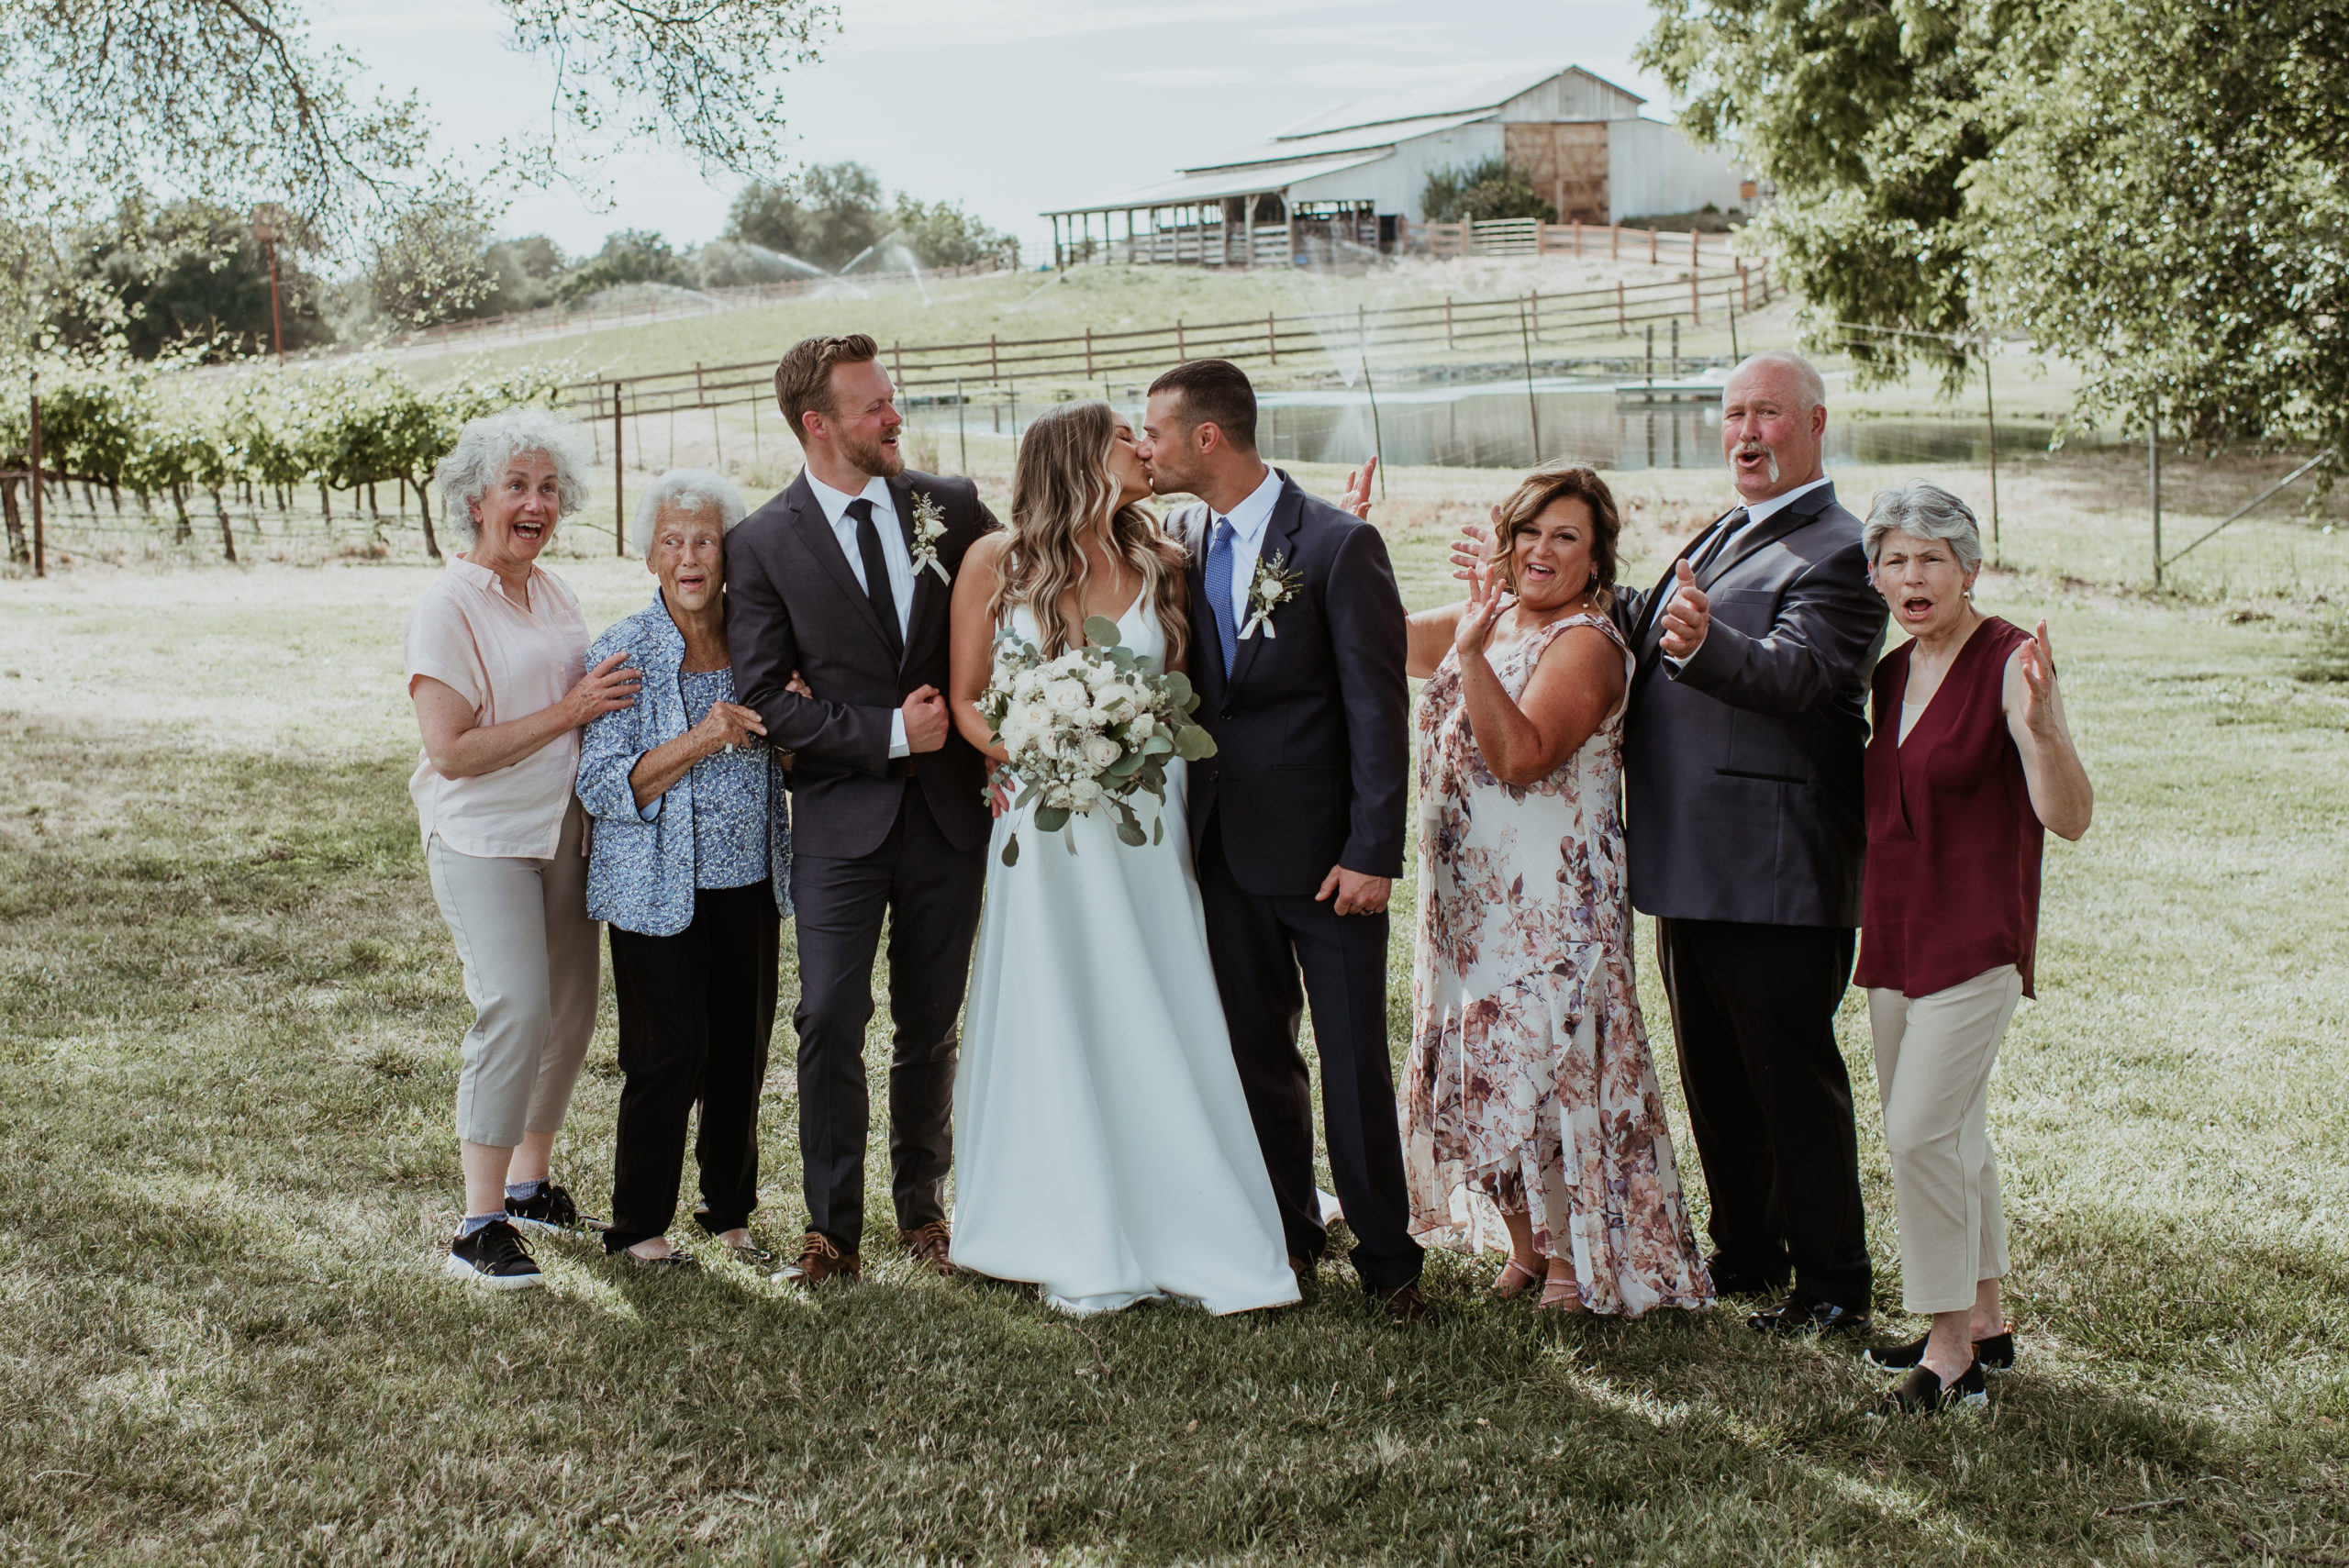 Family wedding photo